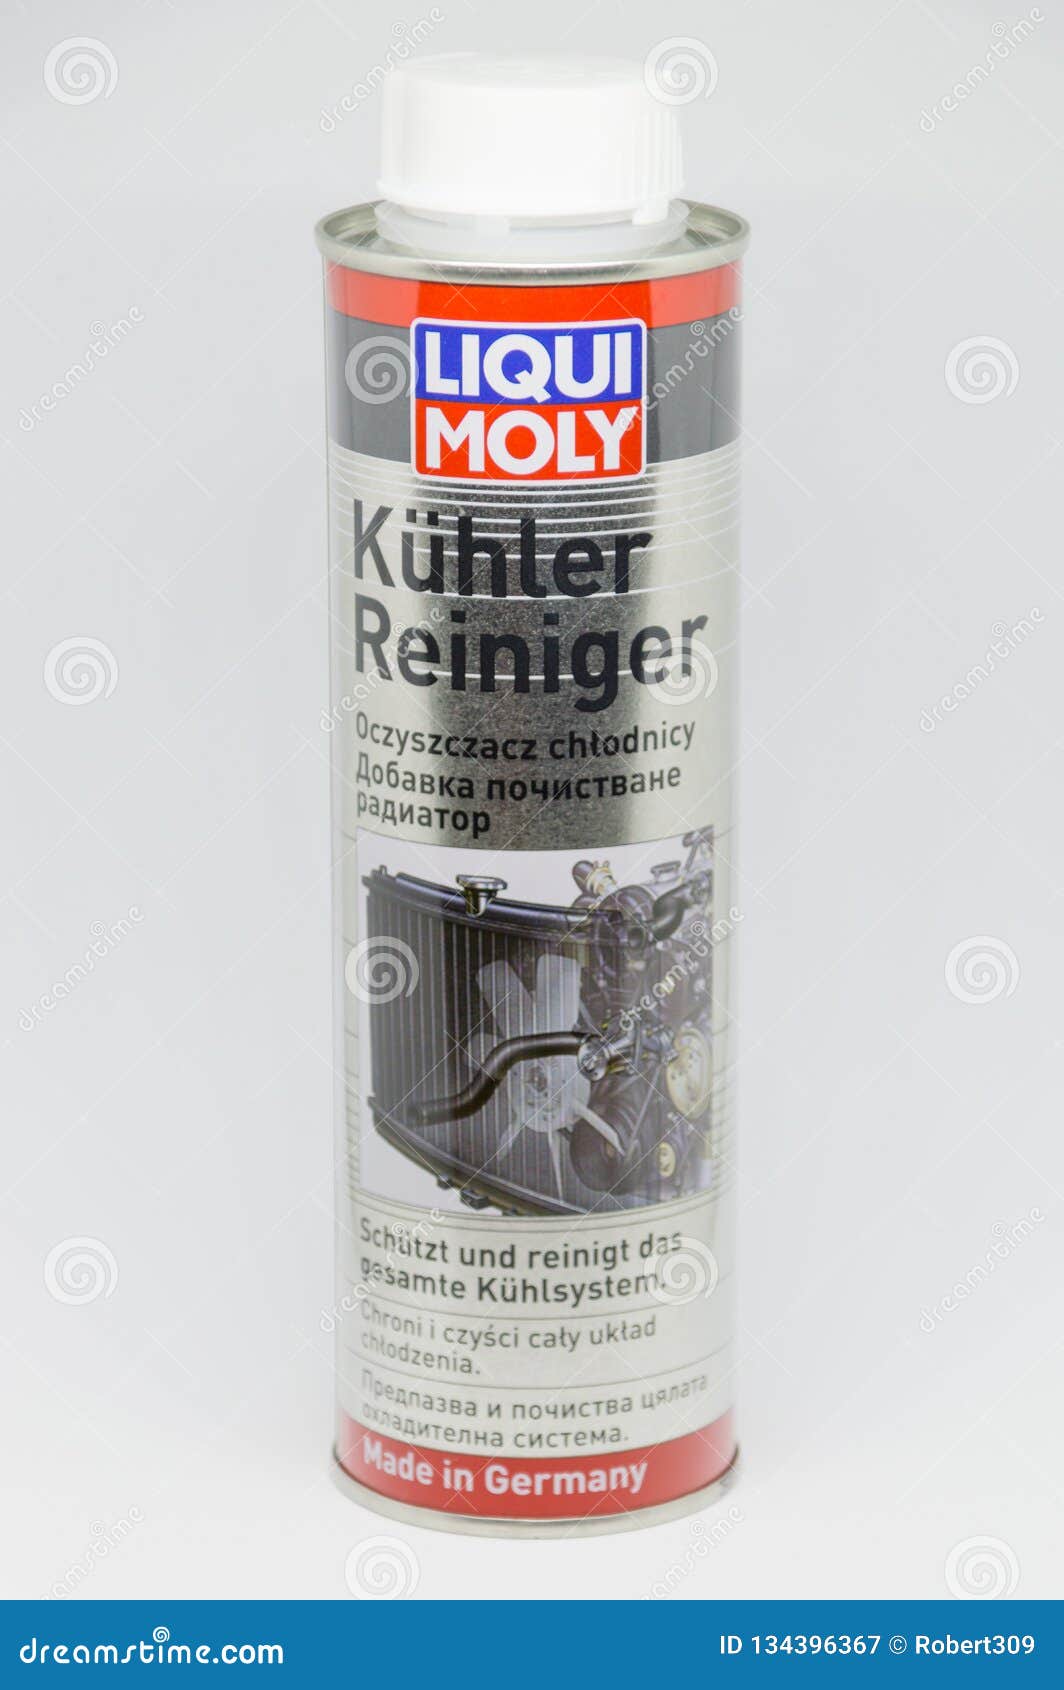 https://thumbs.dreamstime.com/z/ml-liqui-moly-kuhler-reiniger-radiator-flush-clean-car-radiator-pruszcz-gdanski-poland-december-ml-liqui-moly-kuhler-134396367.jpg